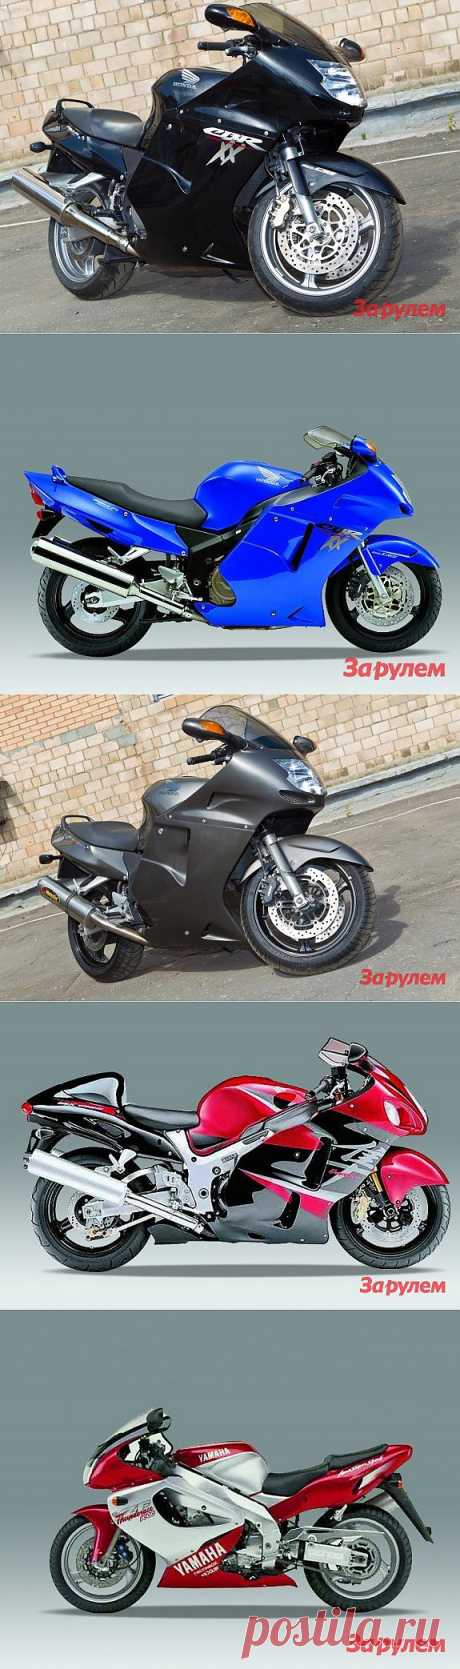 Bikers Life - Honda CBR 1100 XX Super Blackbird